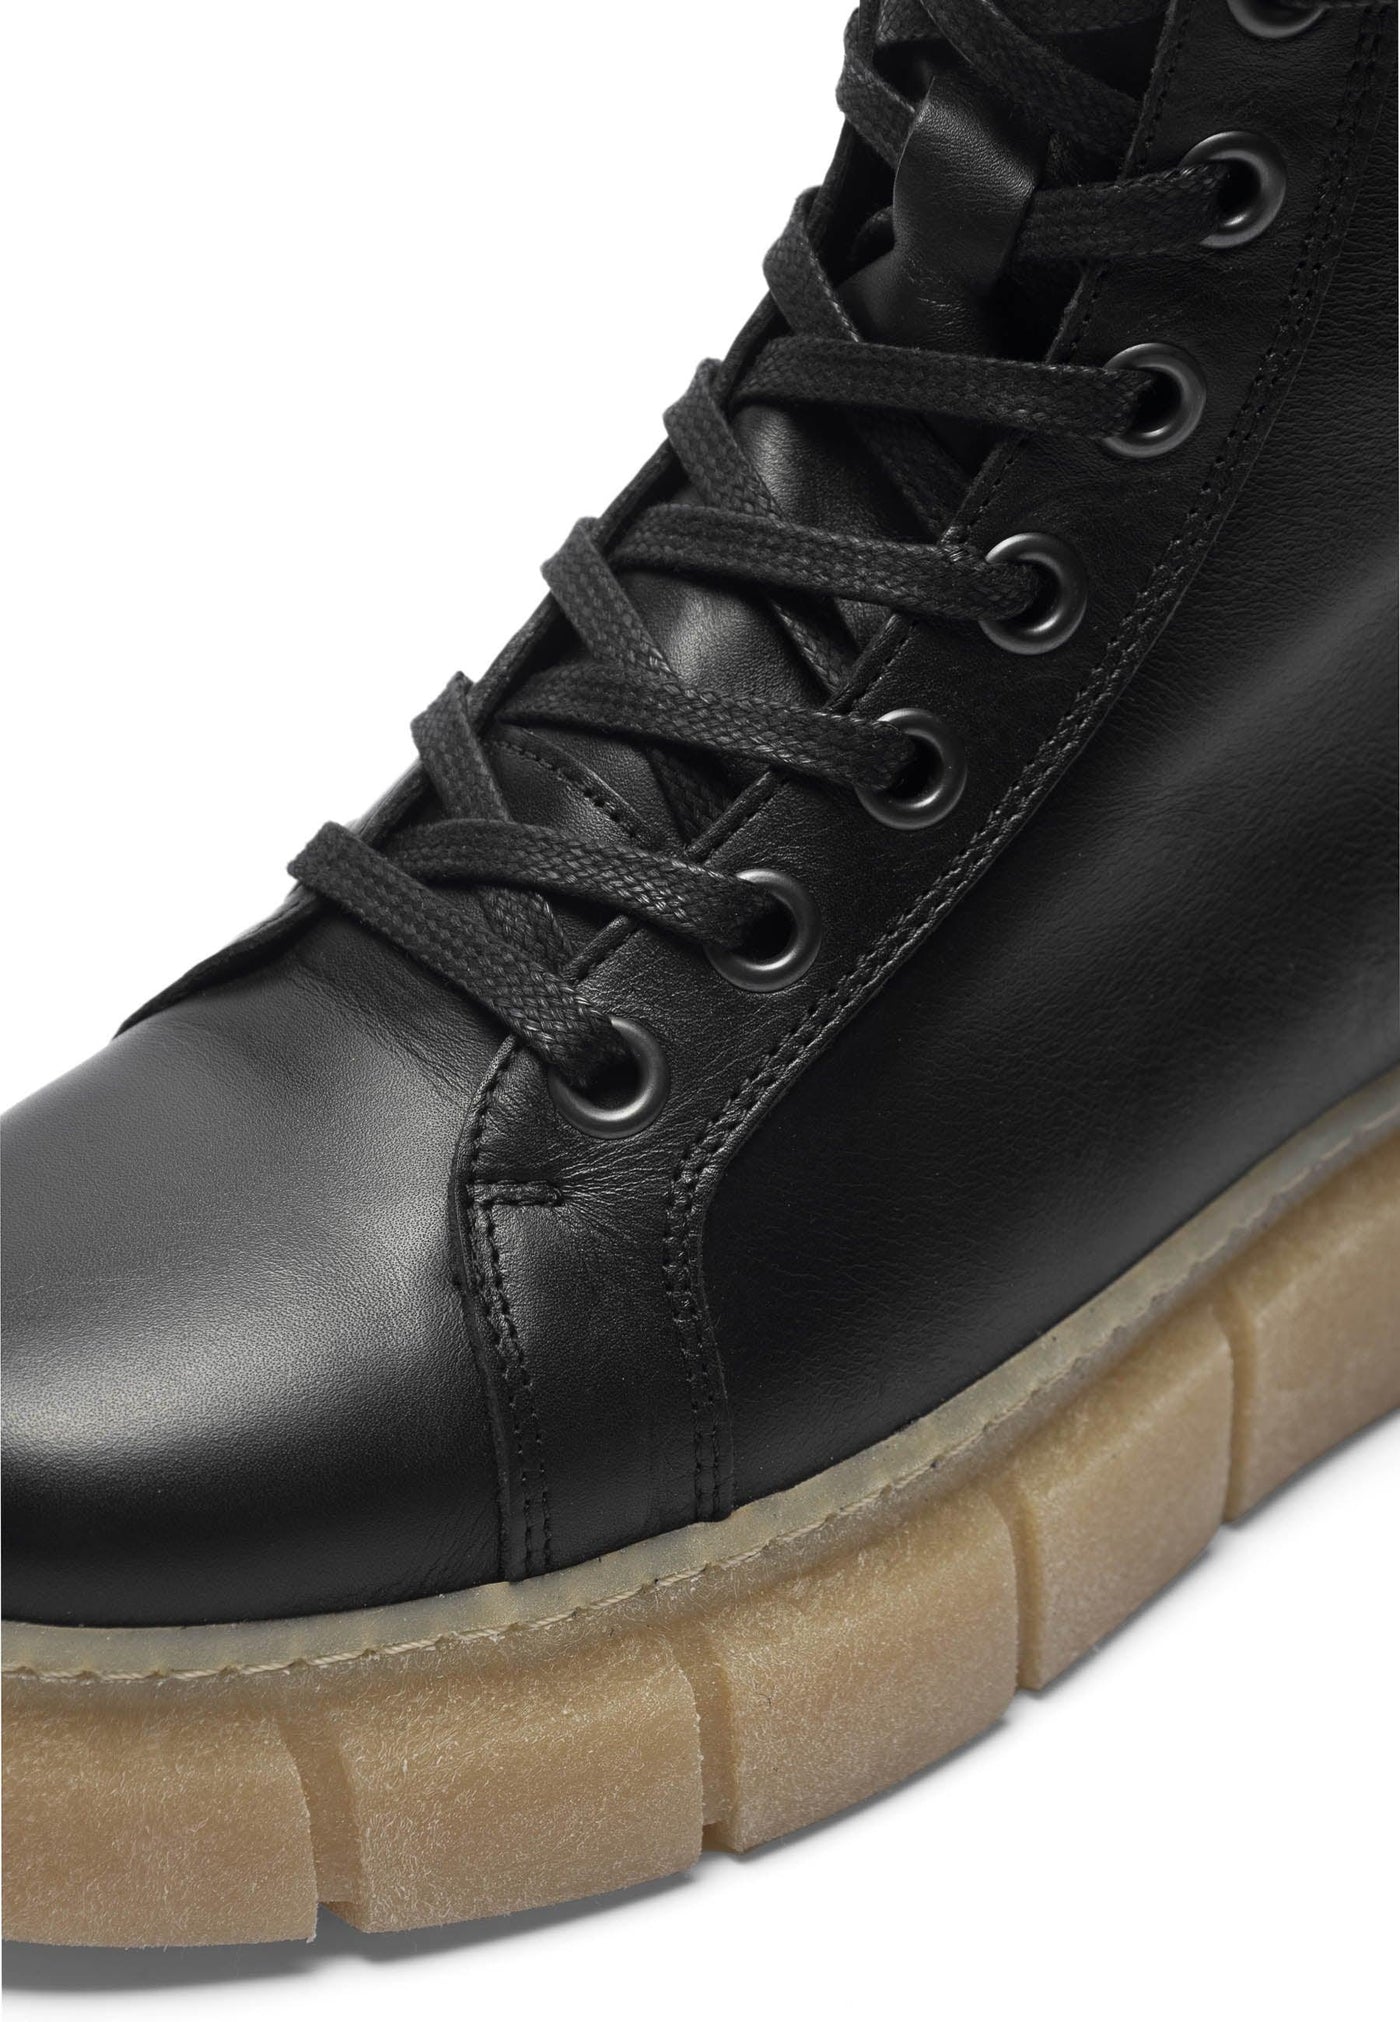 CASFLORA Lace Boot Leather - Ca'Shott Danmark